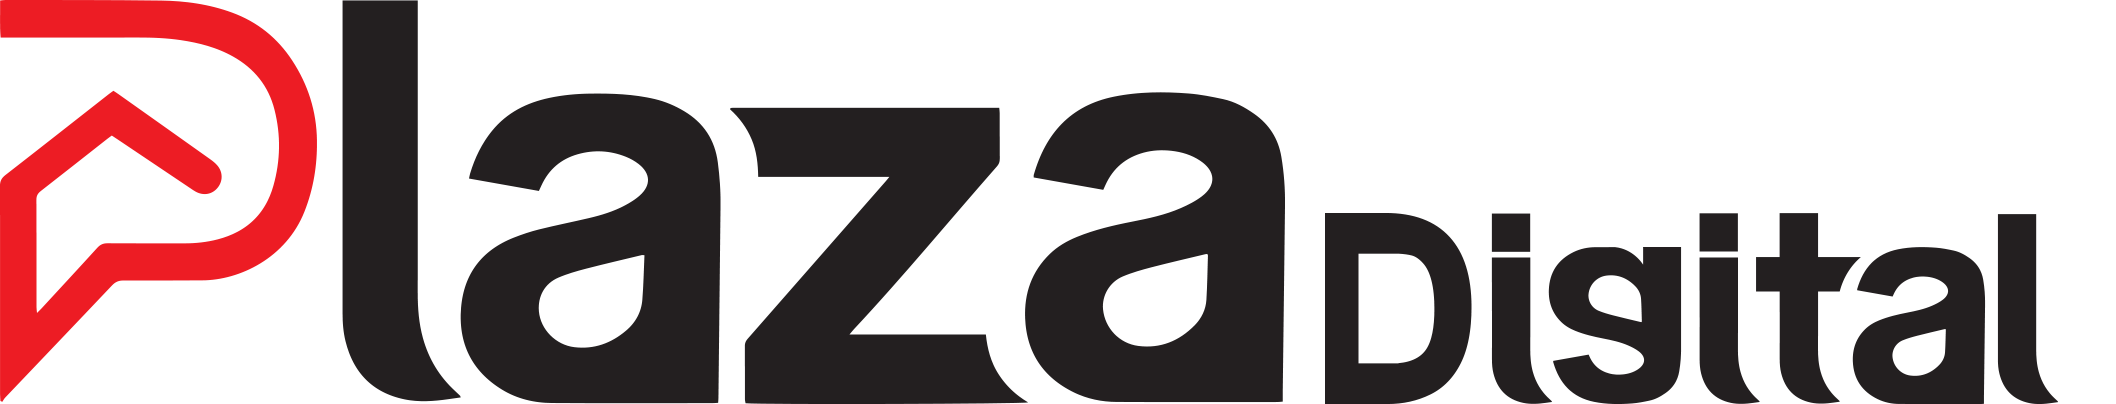 plazadigital logo site - راهنمای انتخاب کامپیوتر همه کاره